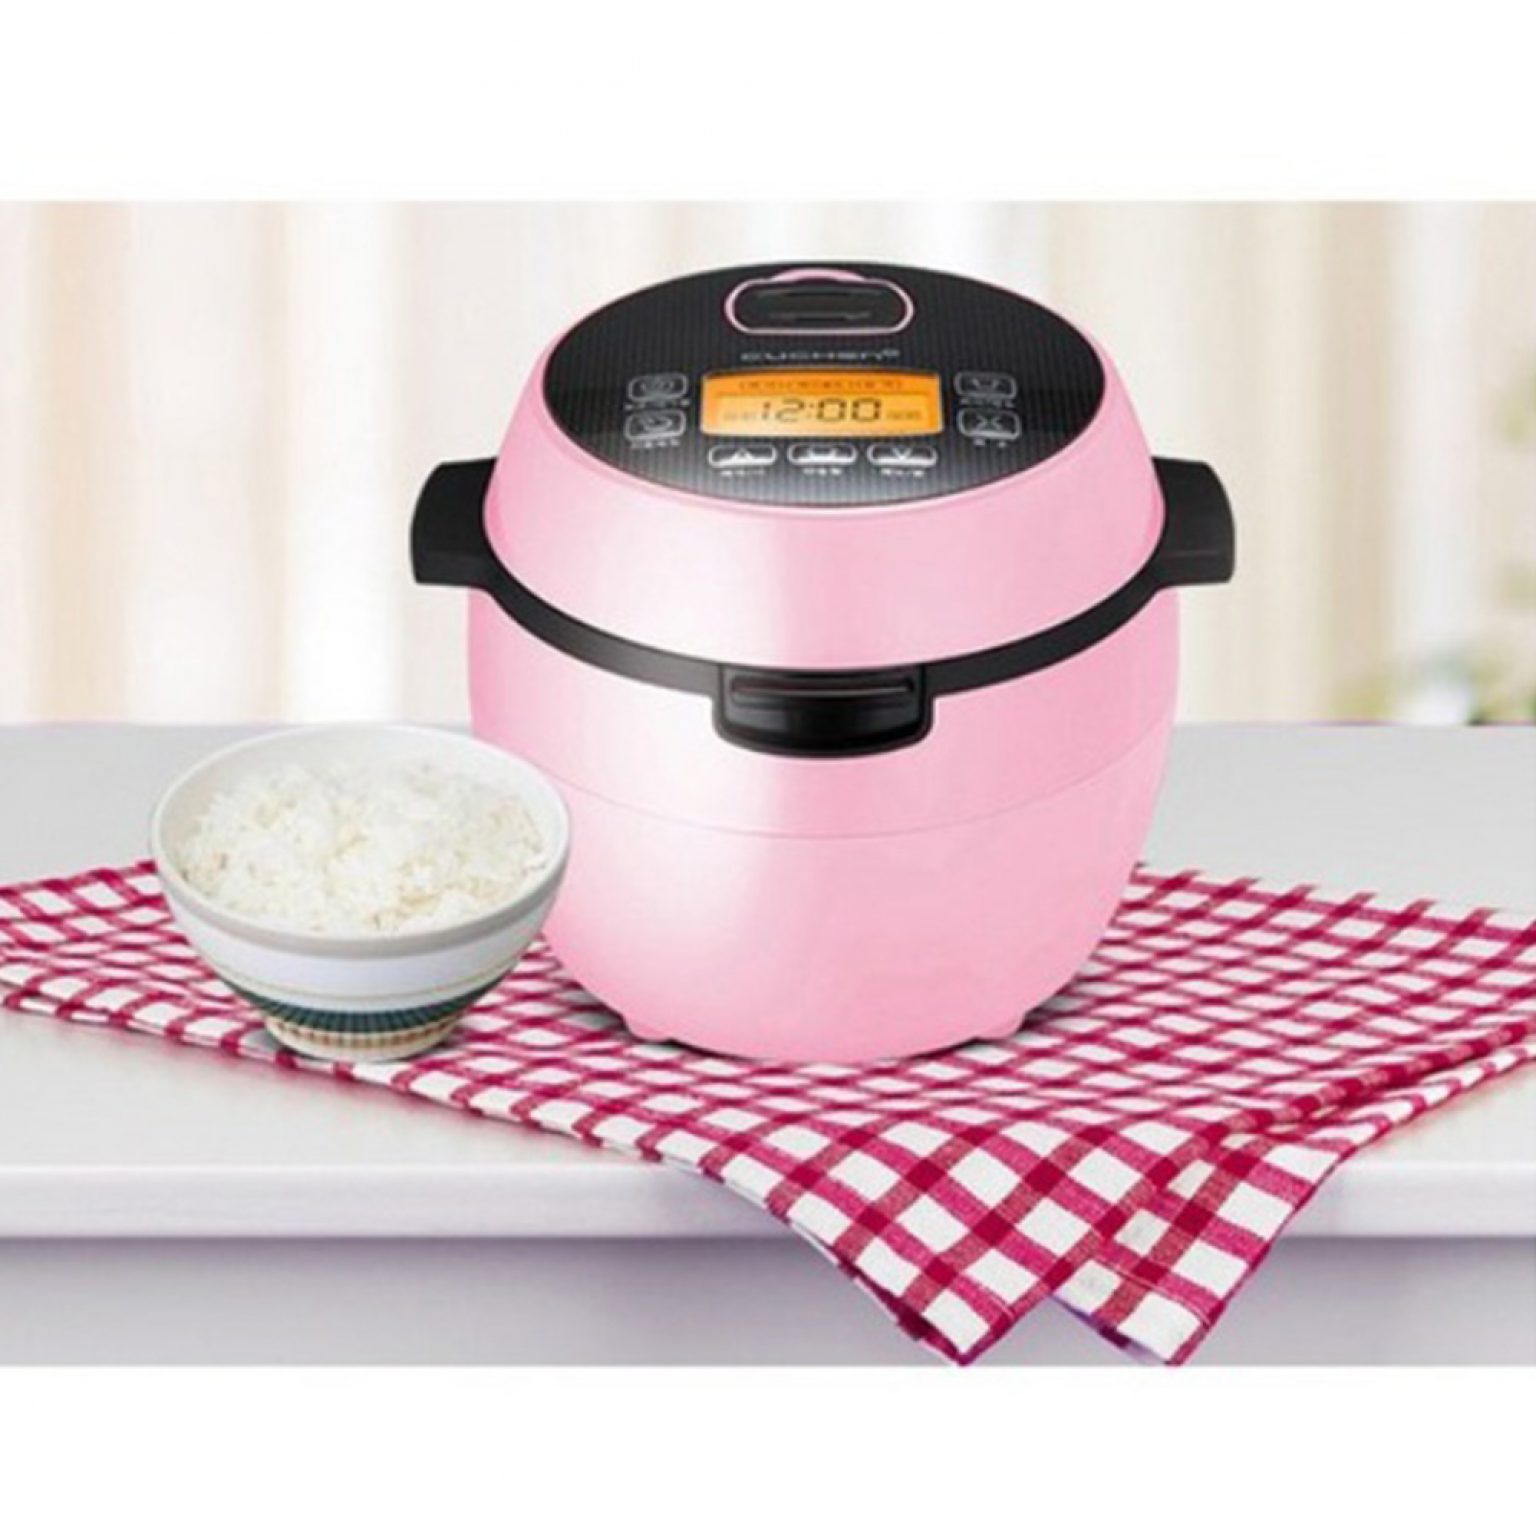 Cuchen Electric Mini Rice Cooker Cje A0305 For 3 People Pink Color 220v Korea E Market 8922